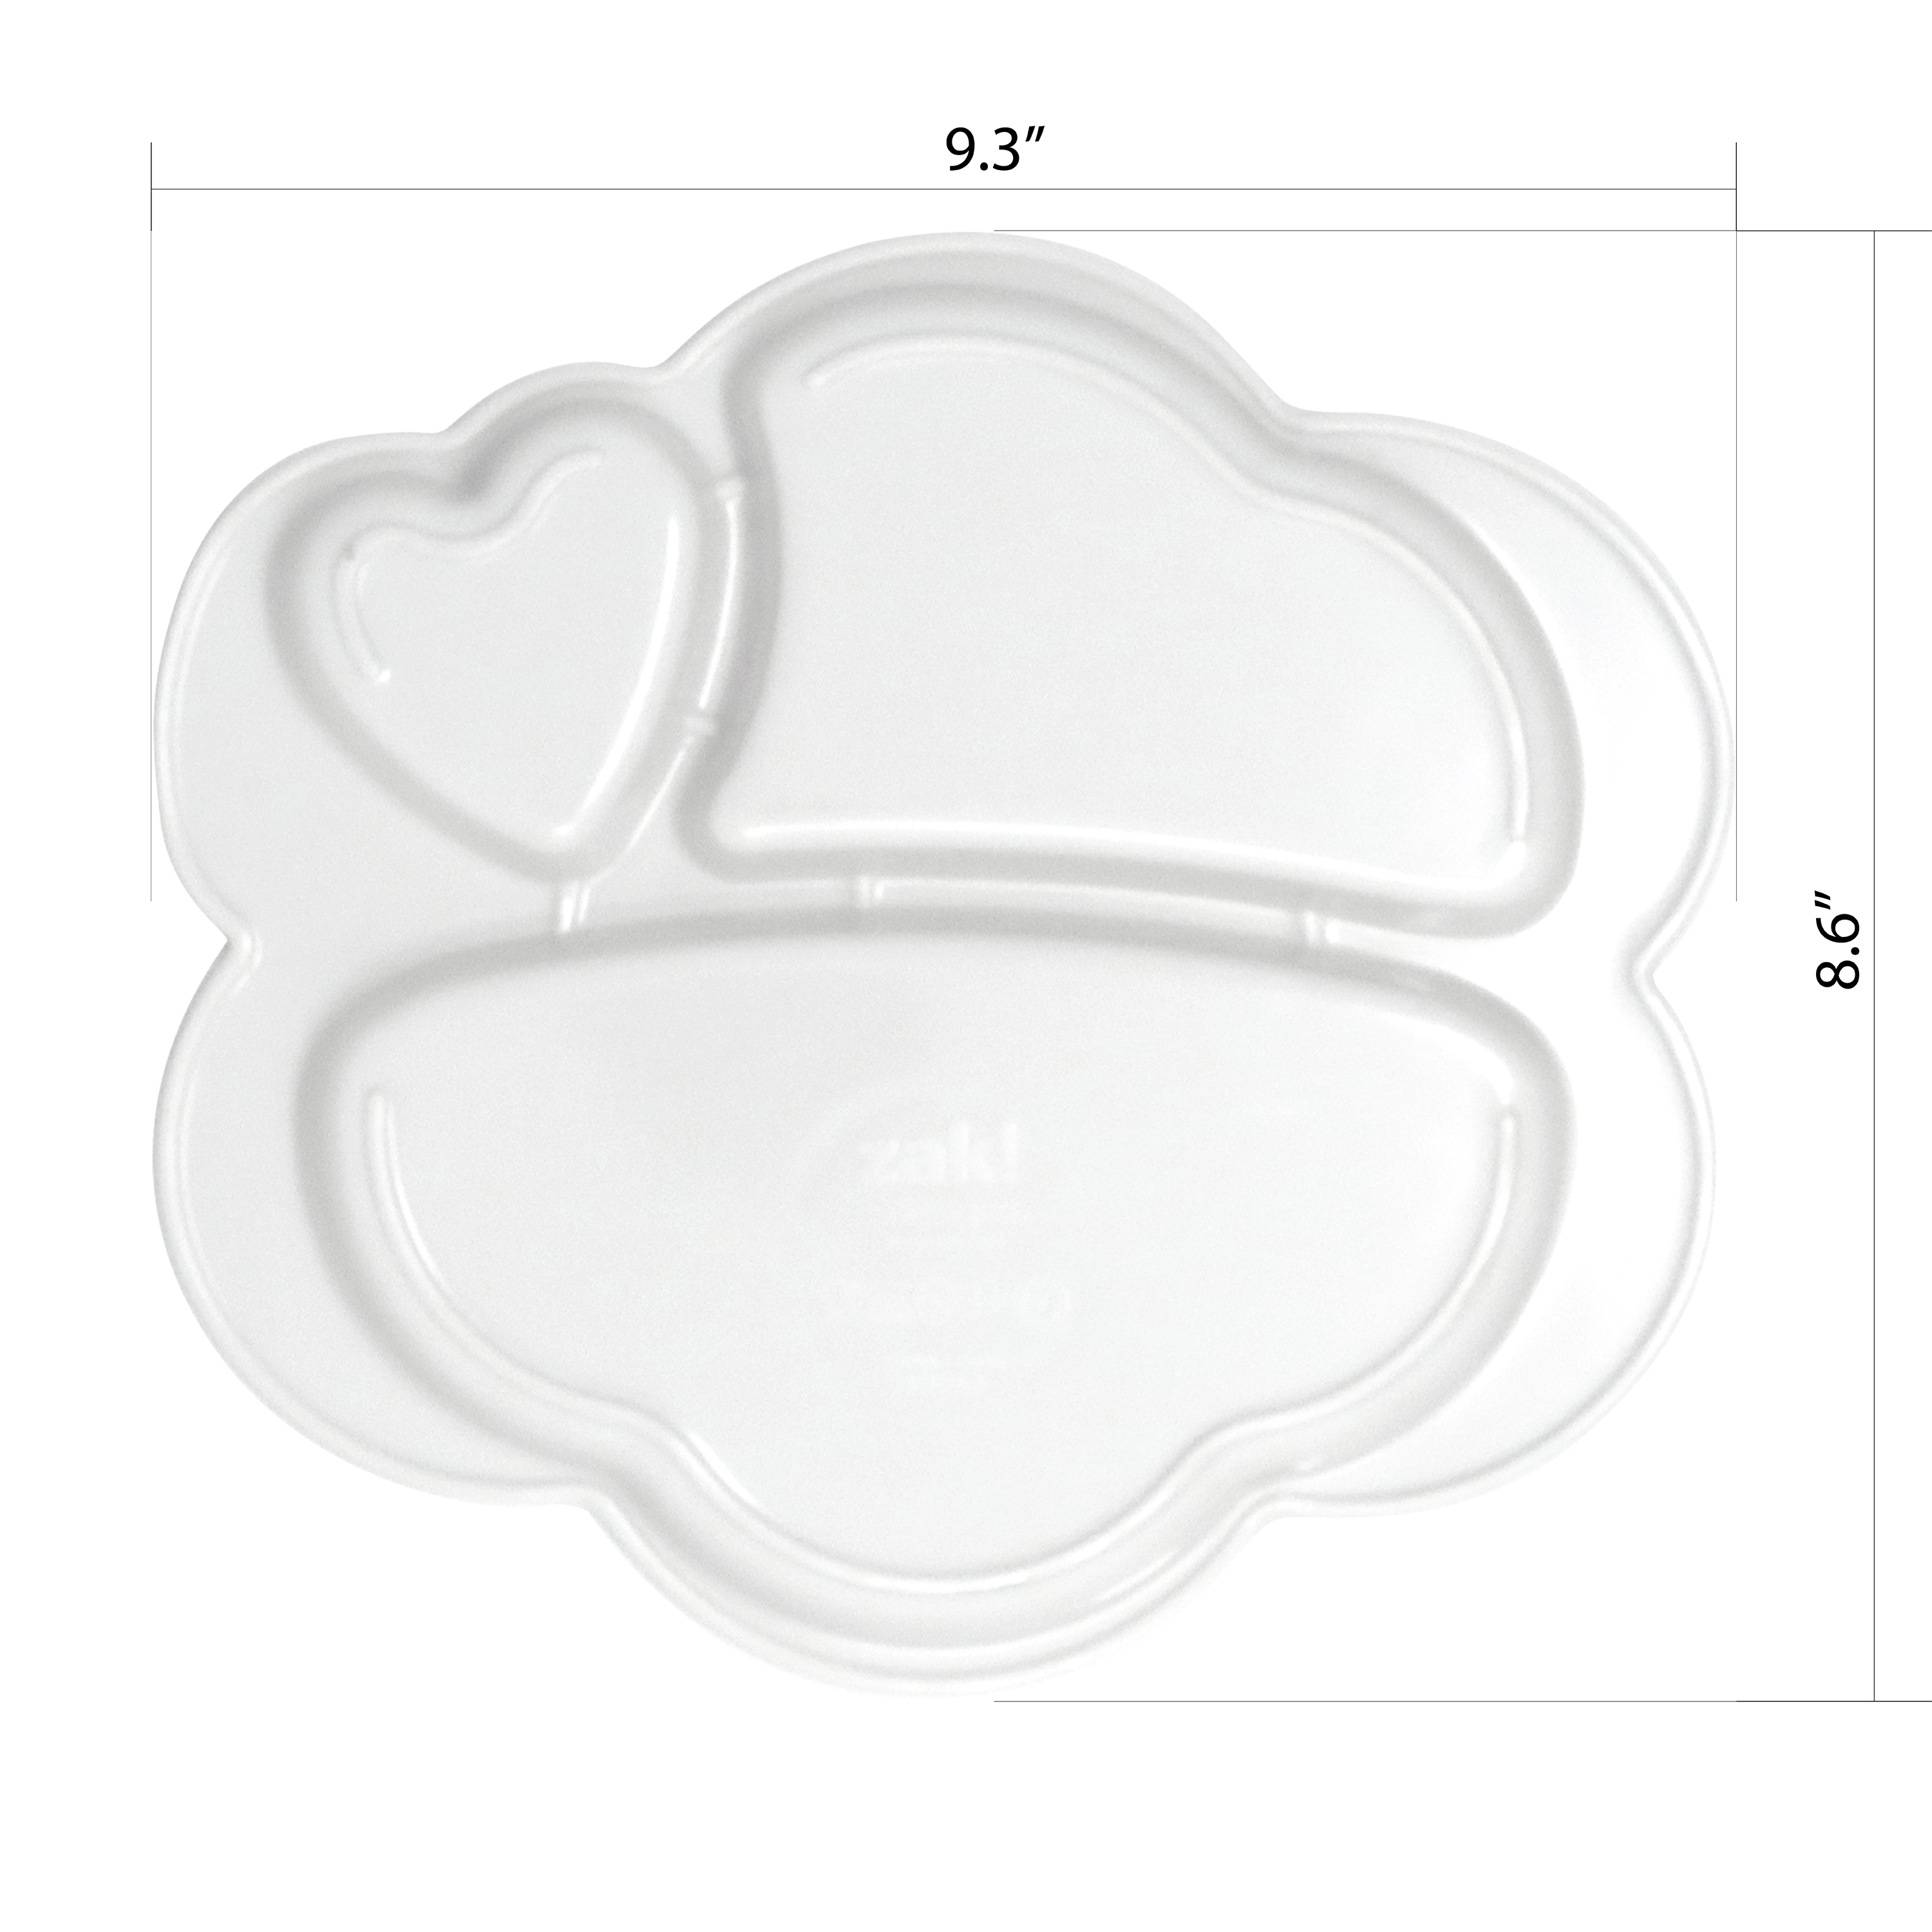 Zak Designs Kids 3-Section Divided Plastic Plate Durable Melamine Break-resistant BPA-Free - image 2 of 3